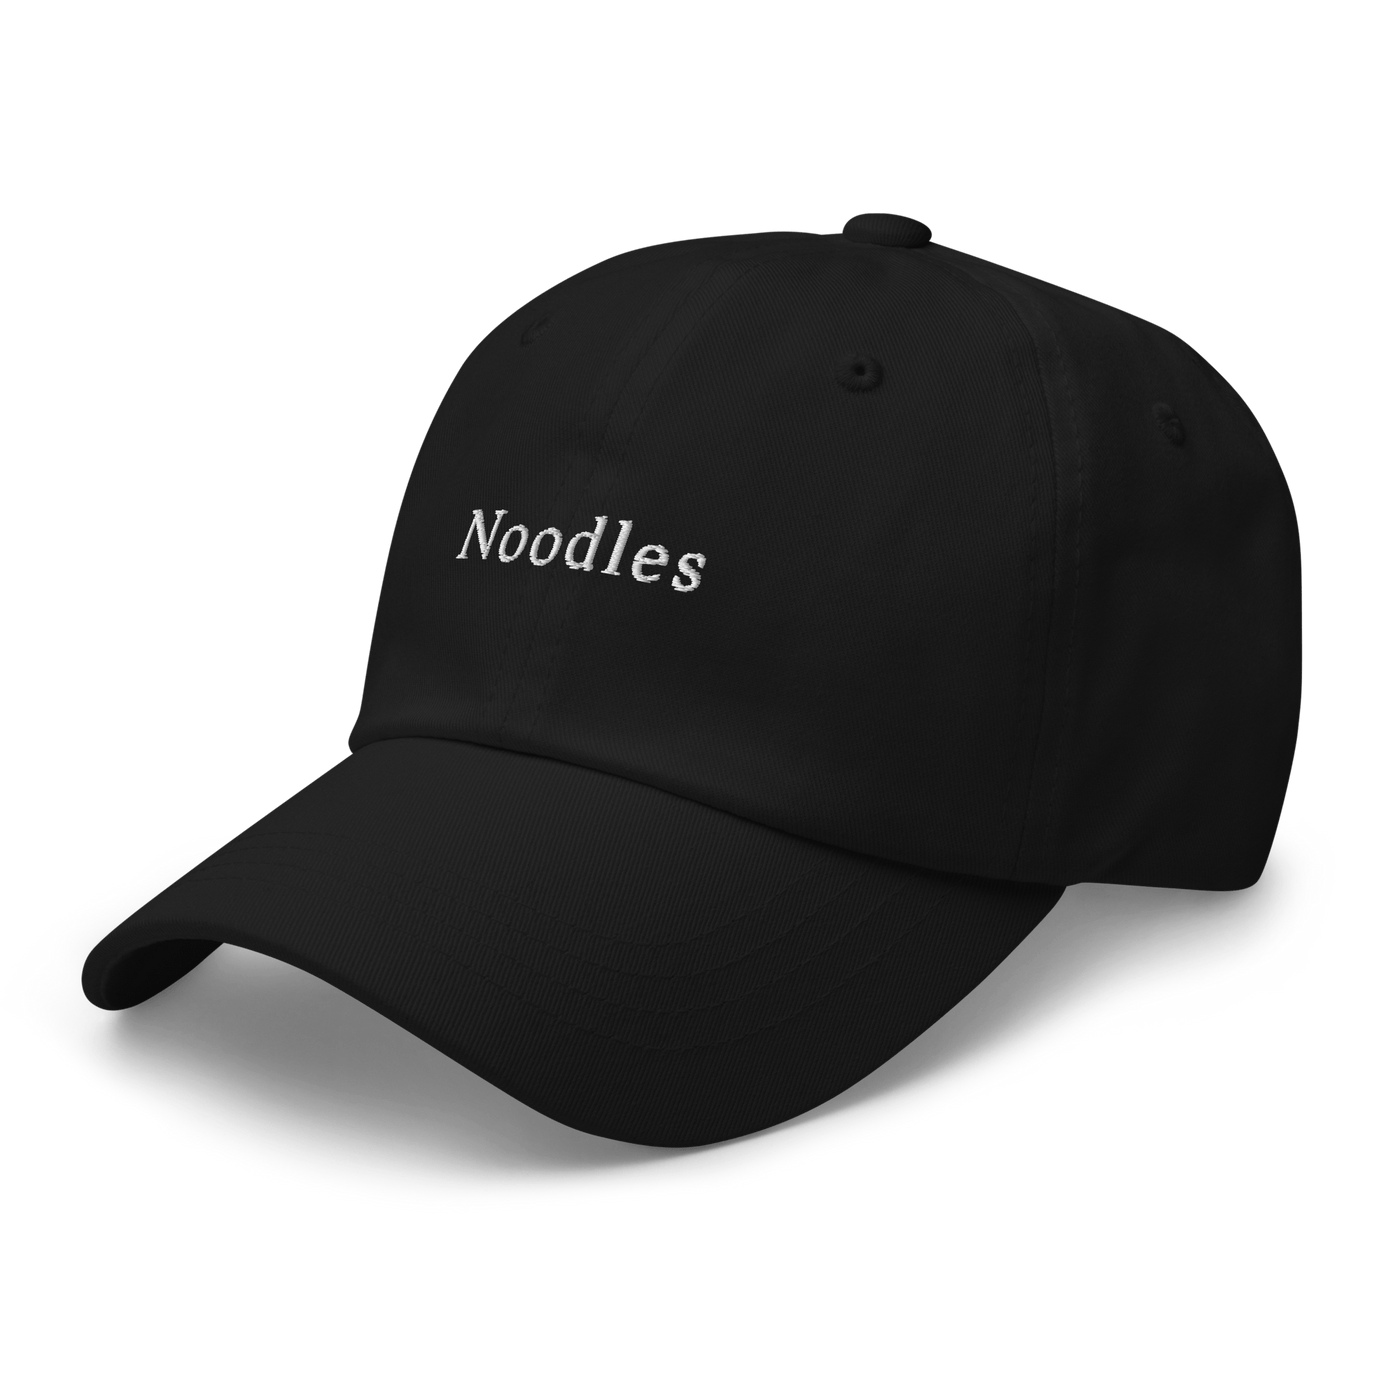 Noodles Dad hat - Black - - Just Another Cap Store